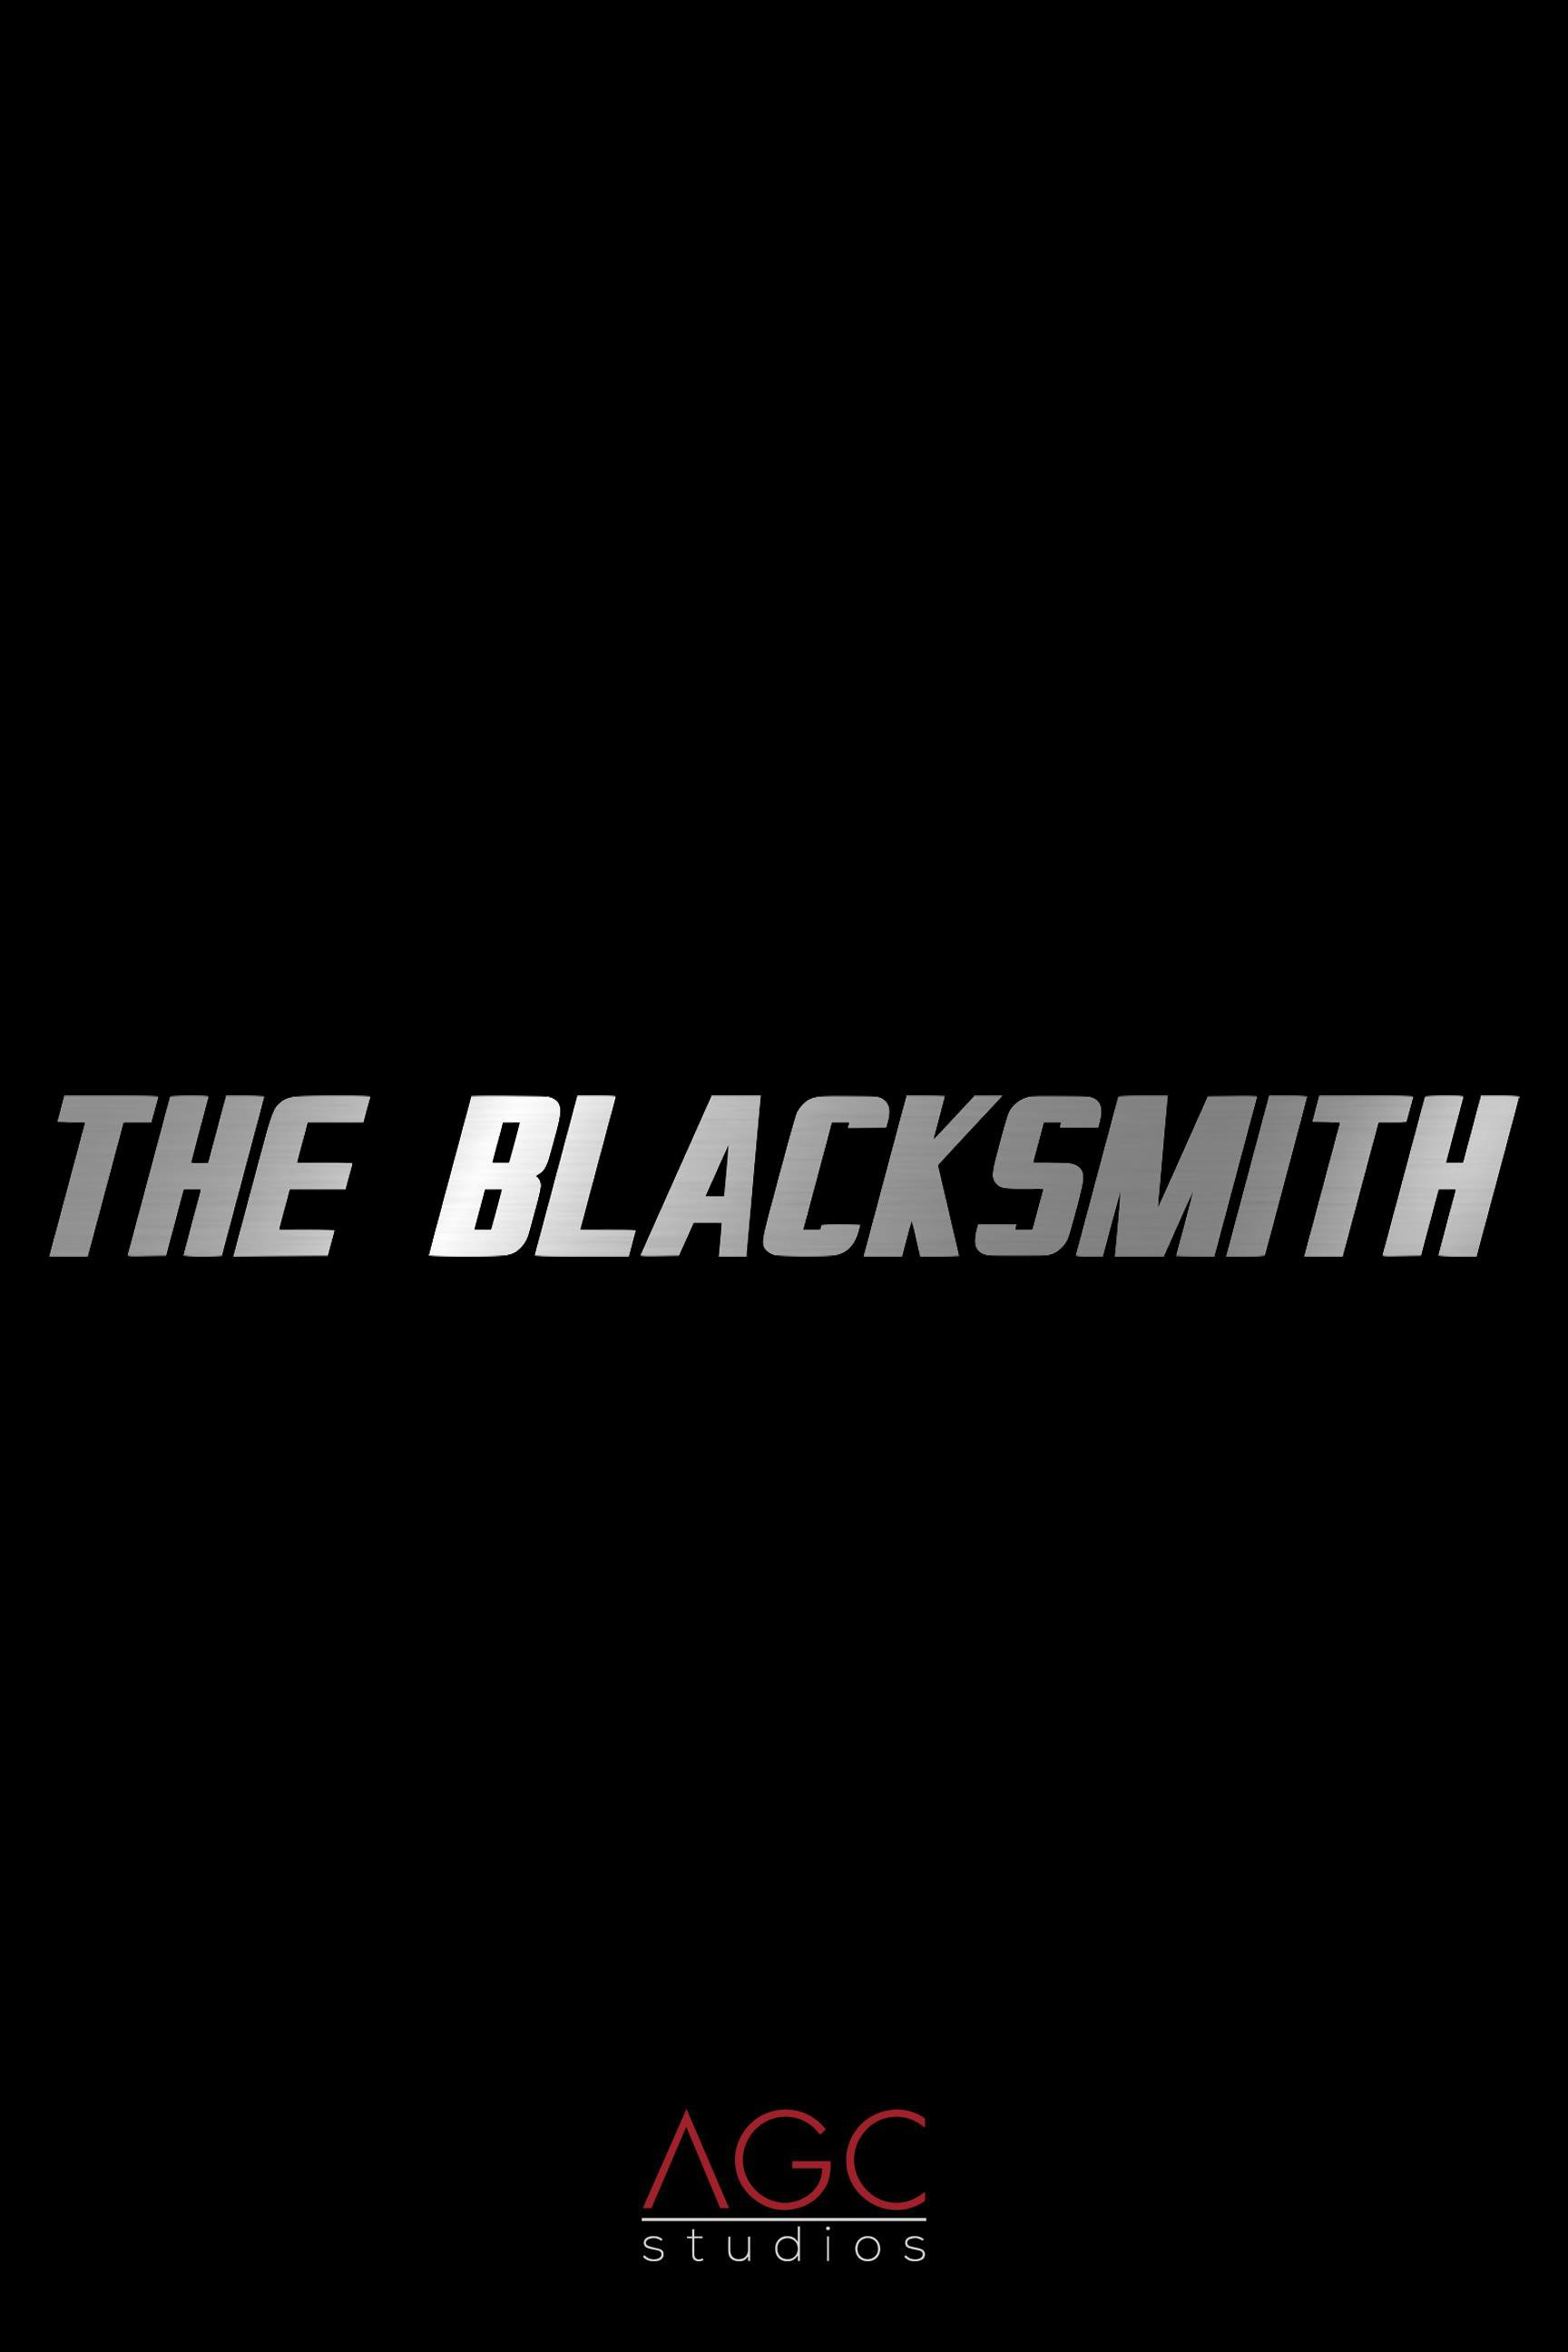 THE BLACKSMITH